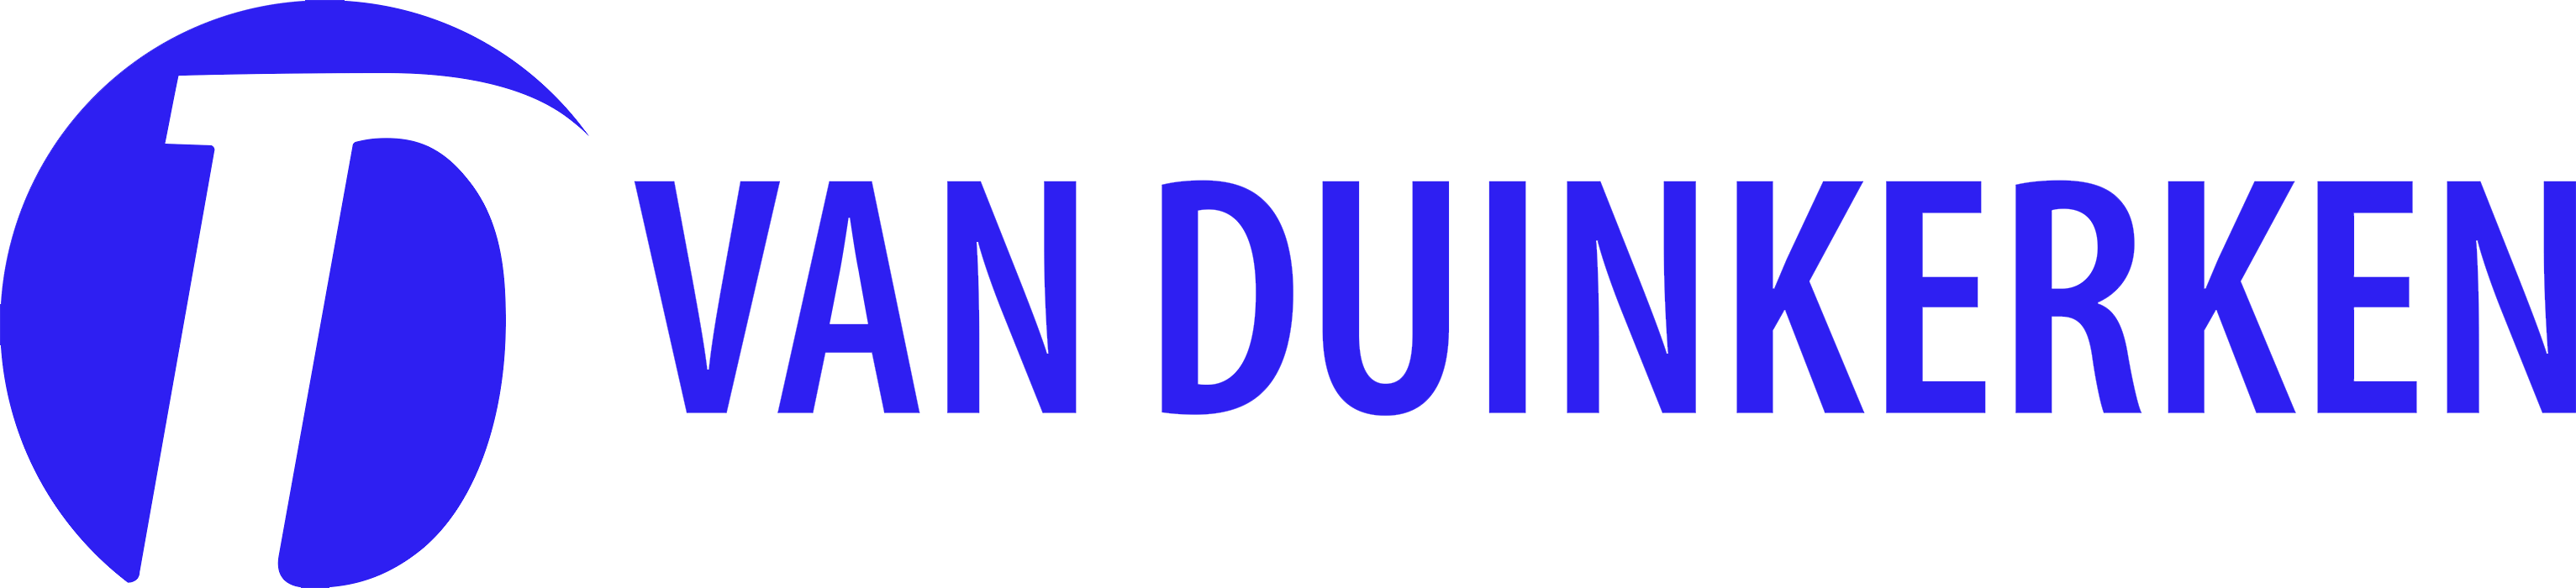 logo_van_duinkerken-savvi